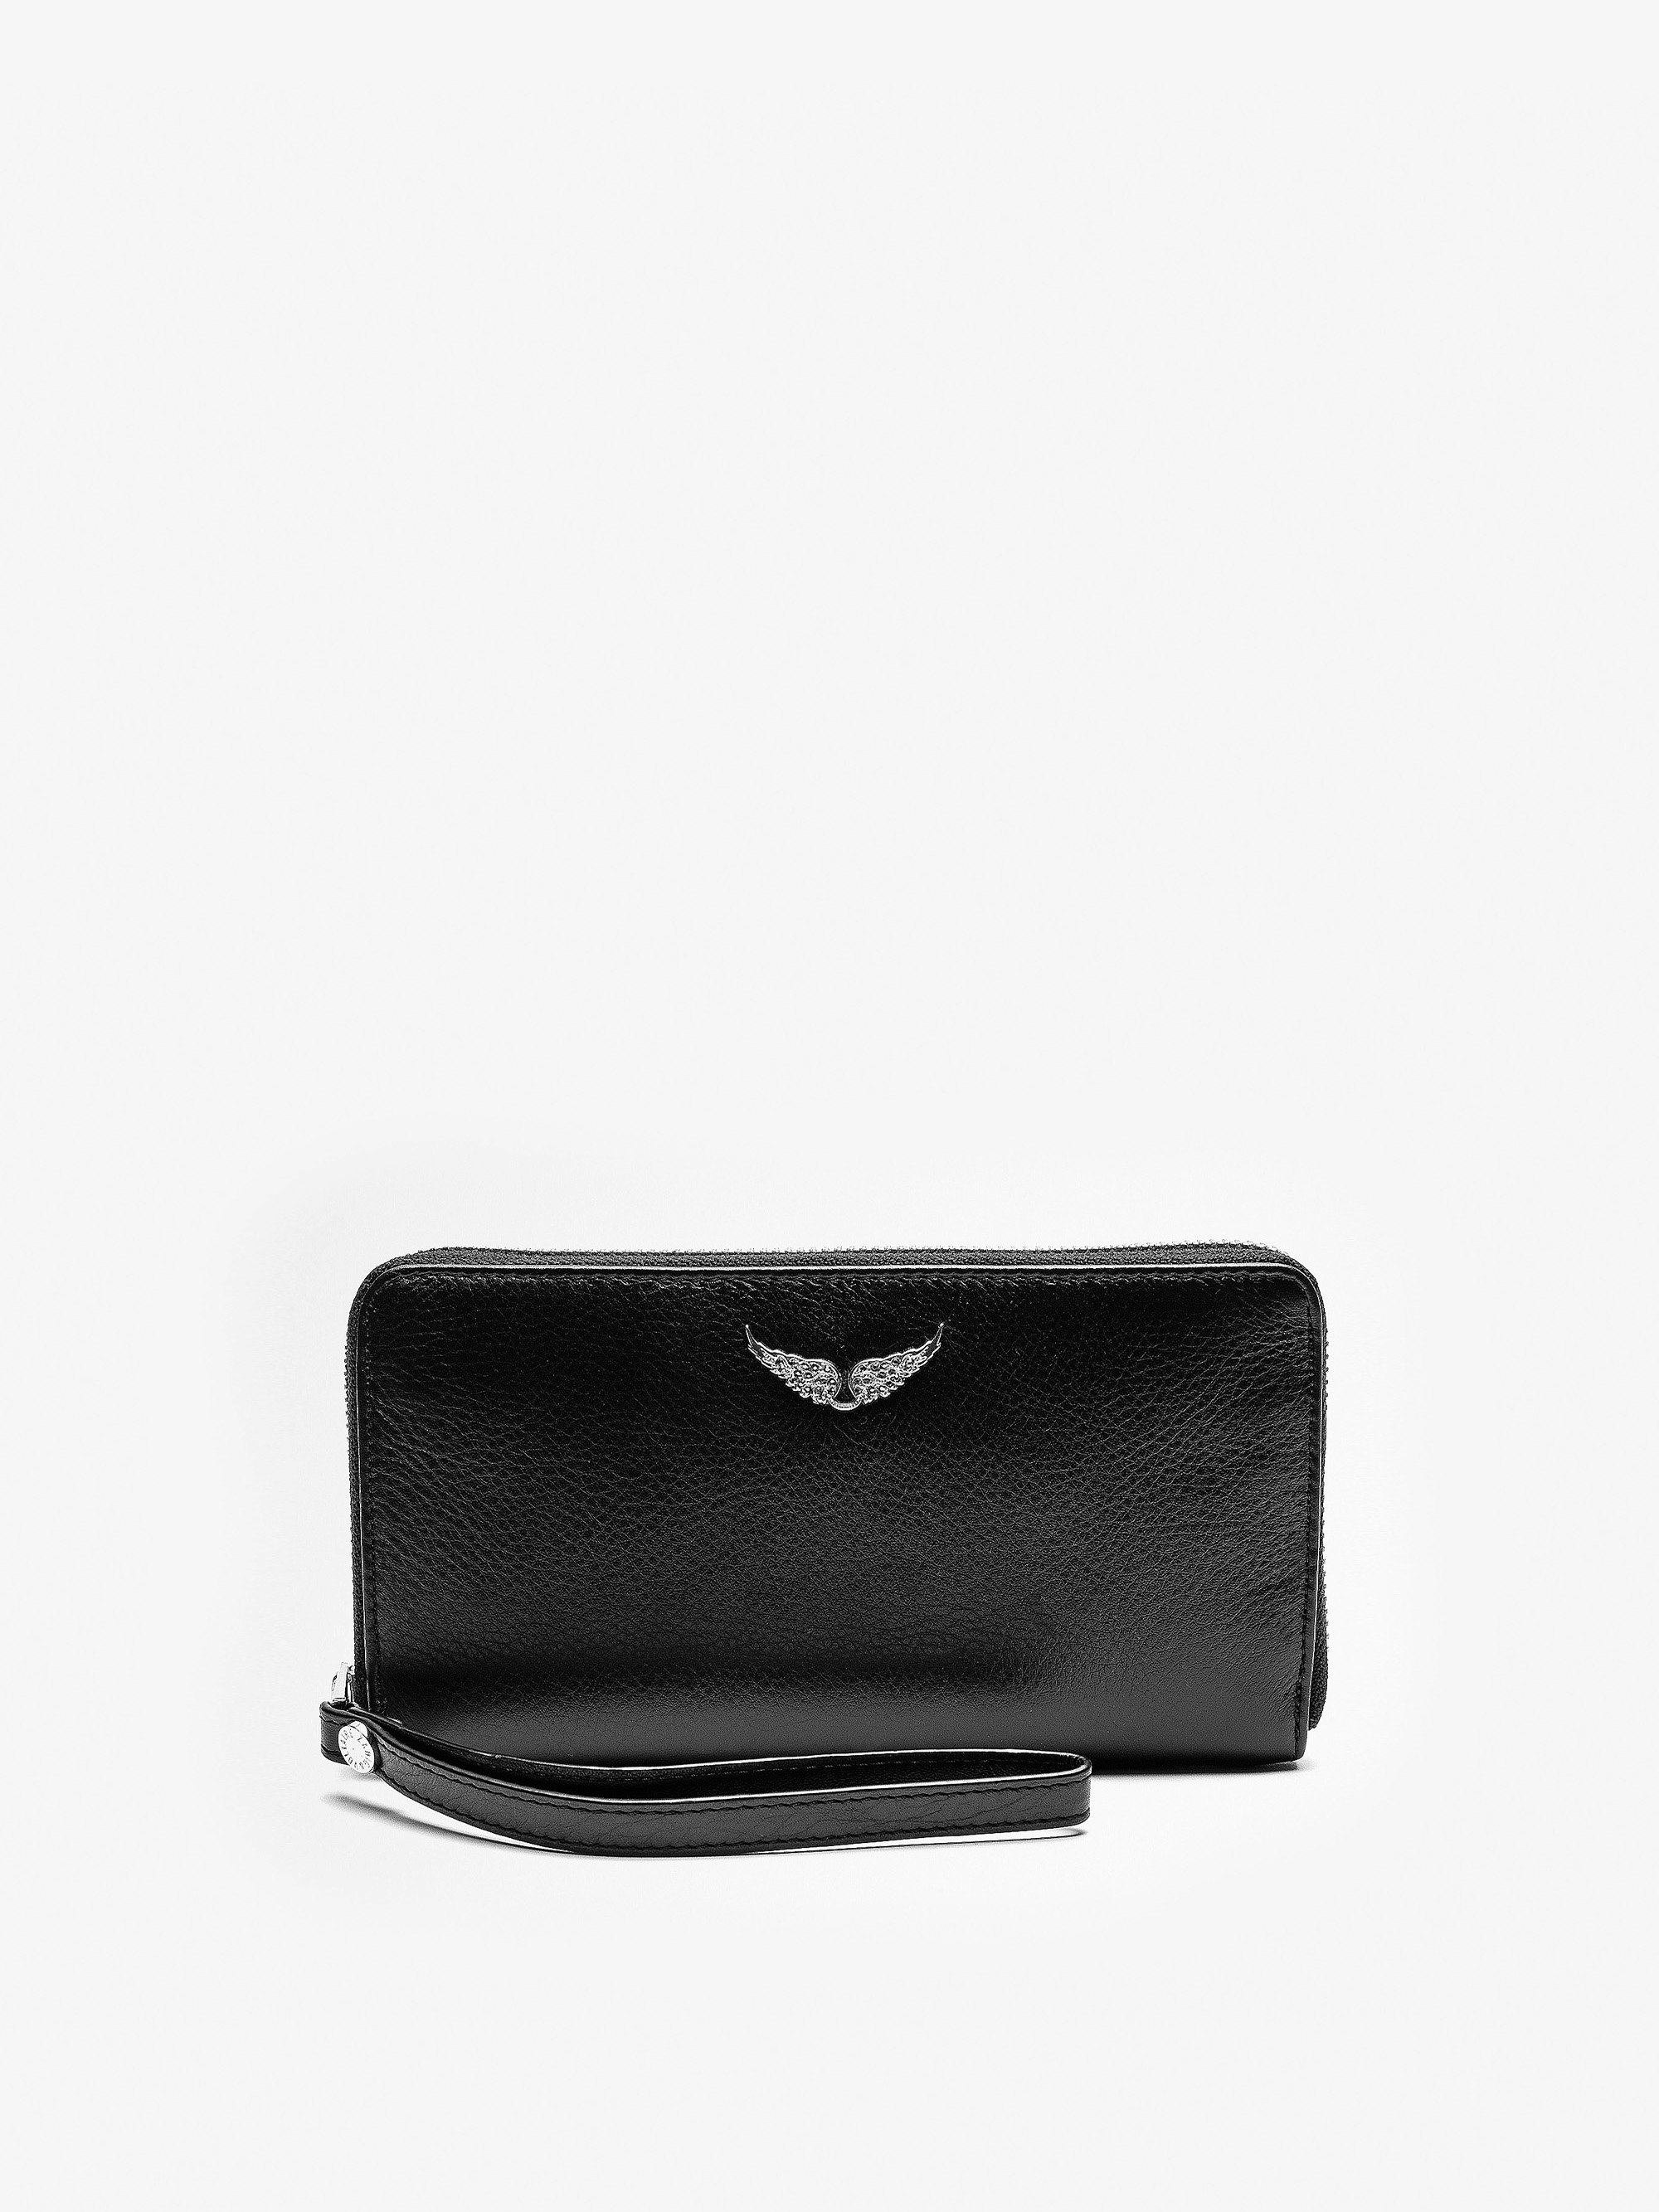 Compagnon Wallet - Women’s black leather wallet.